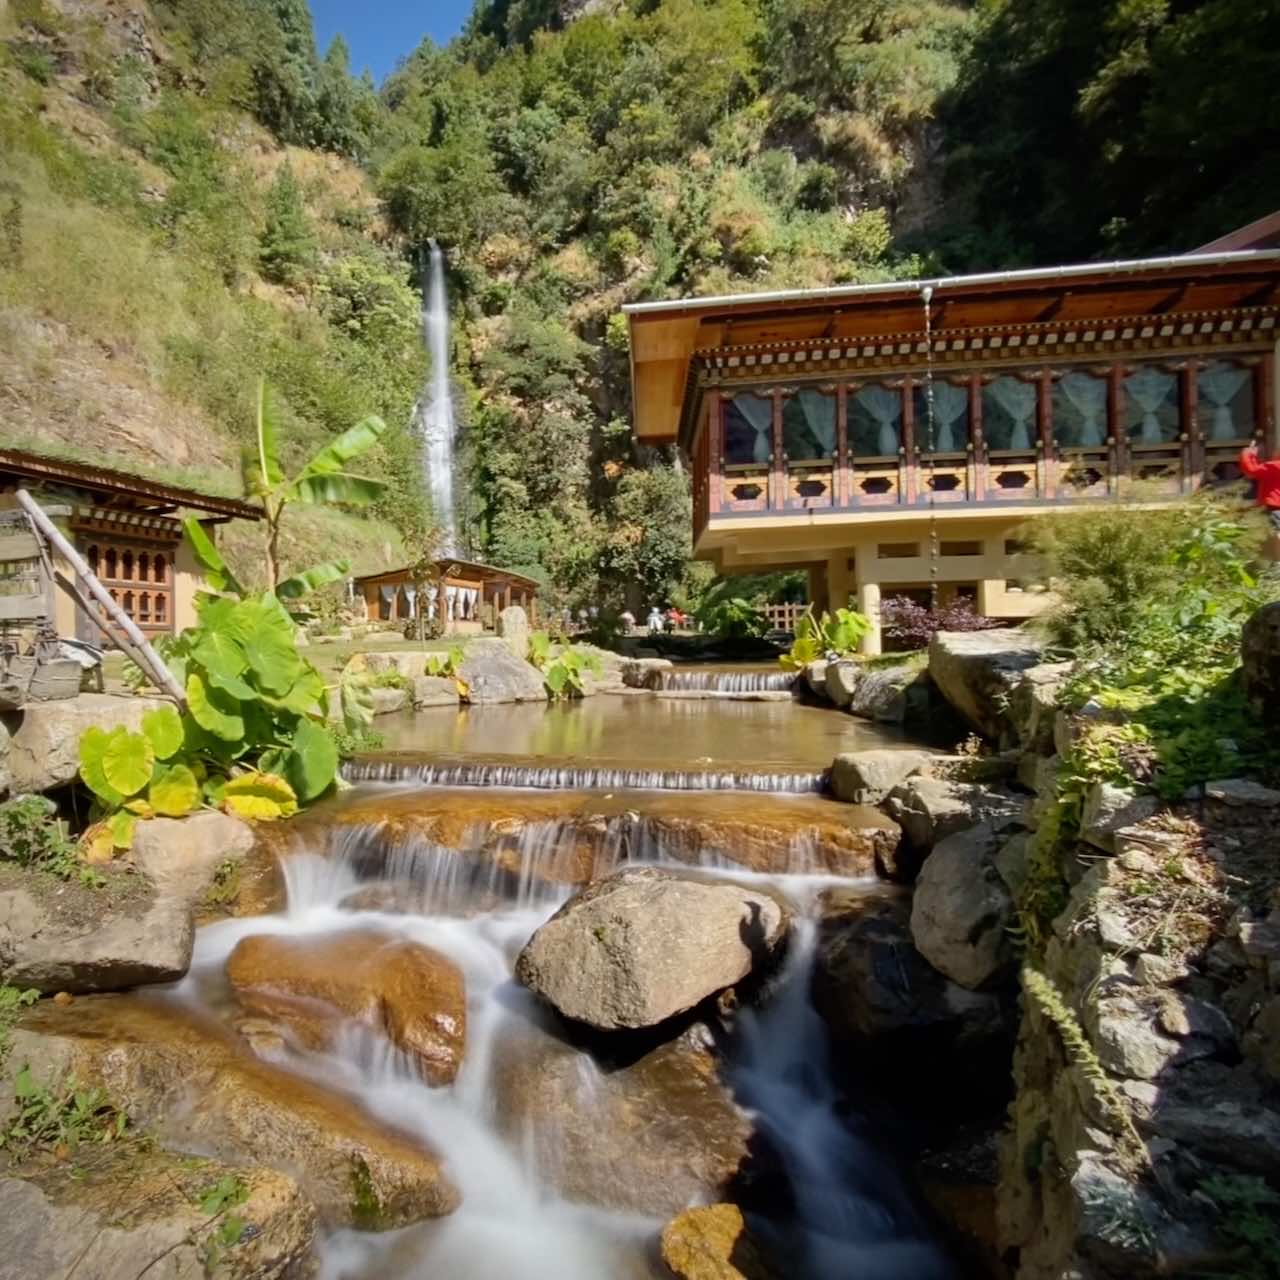 A waterfall outside a scenic restaurant in Bhutan